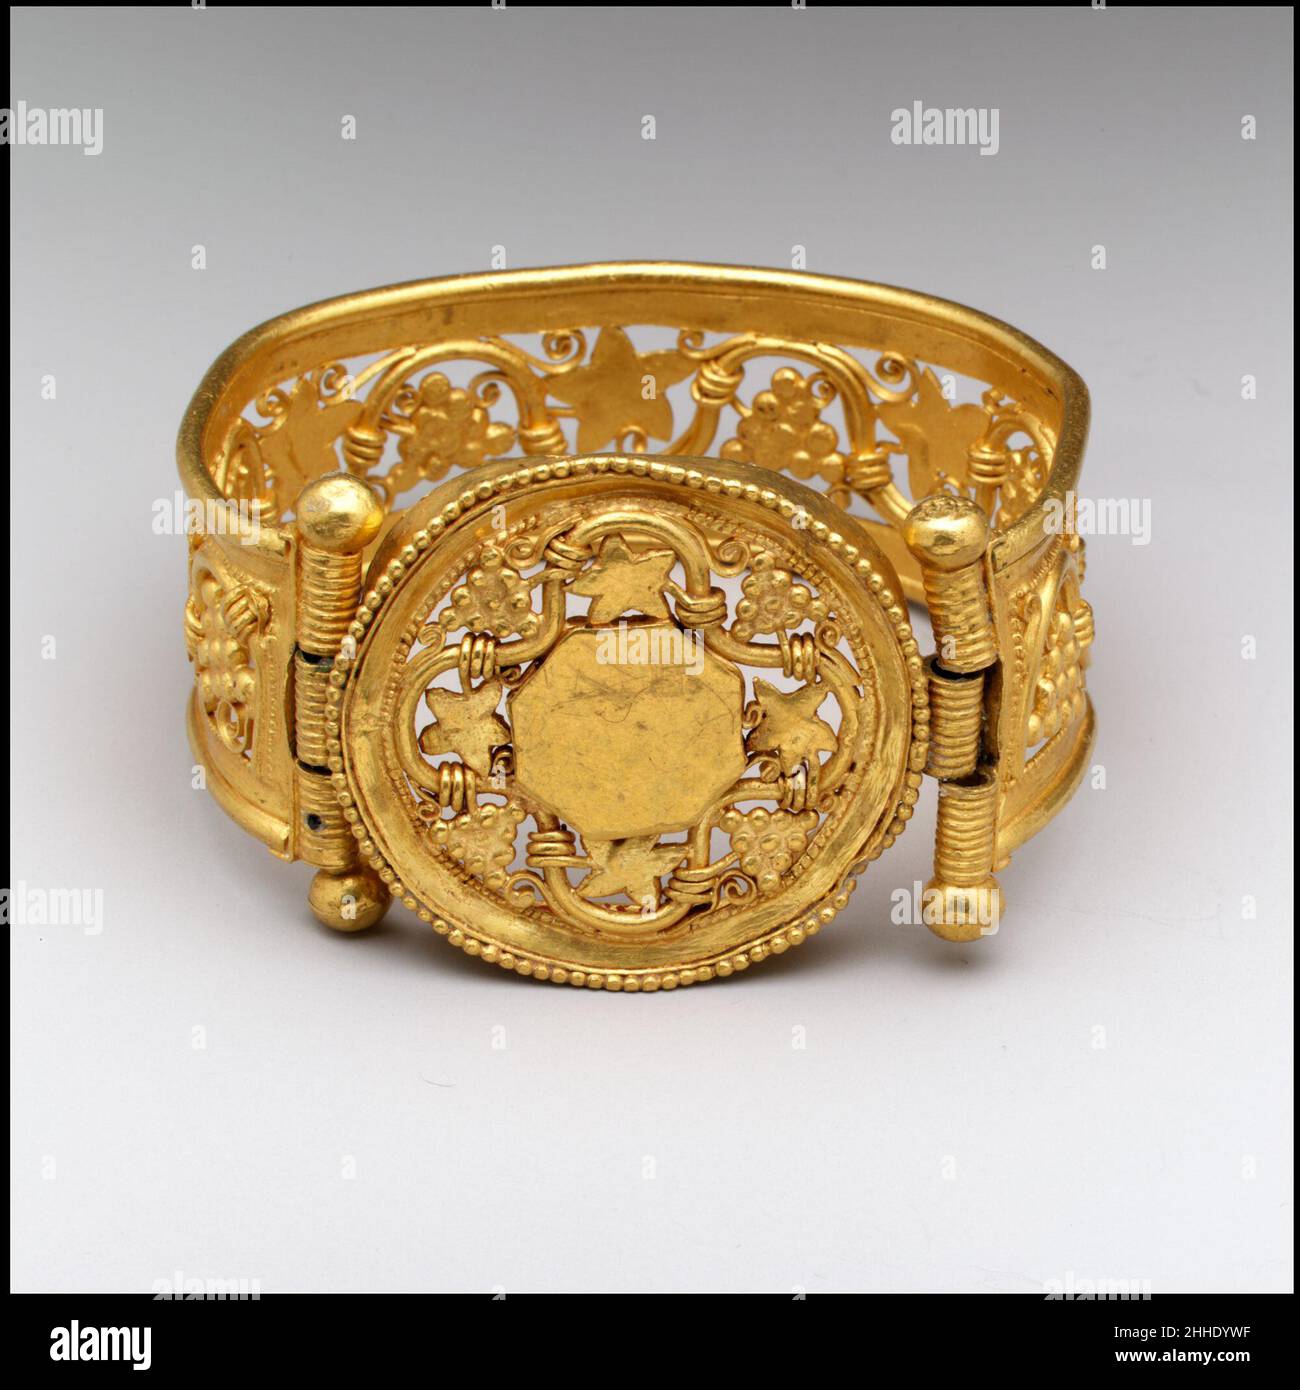 Dickes gold -Fotos und -Bildmaterial in hoher Auflösung – Alamy